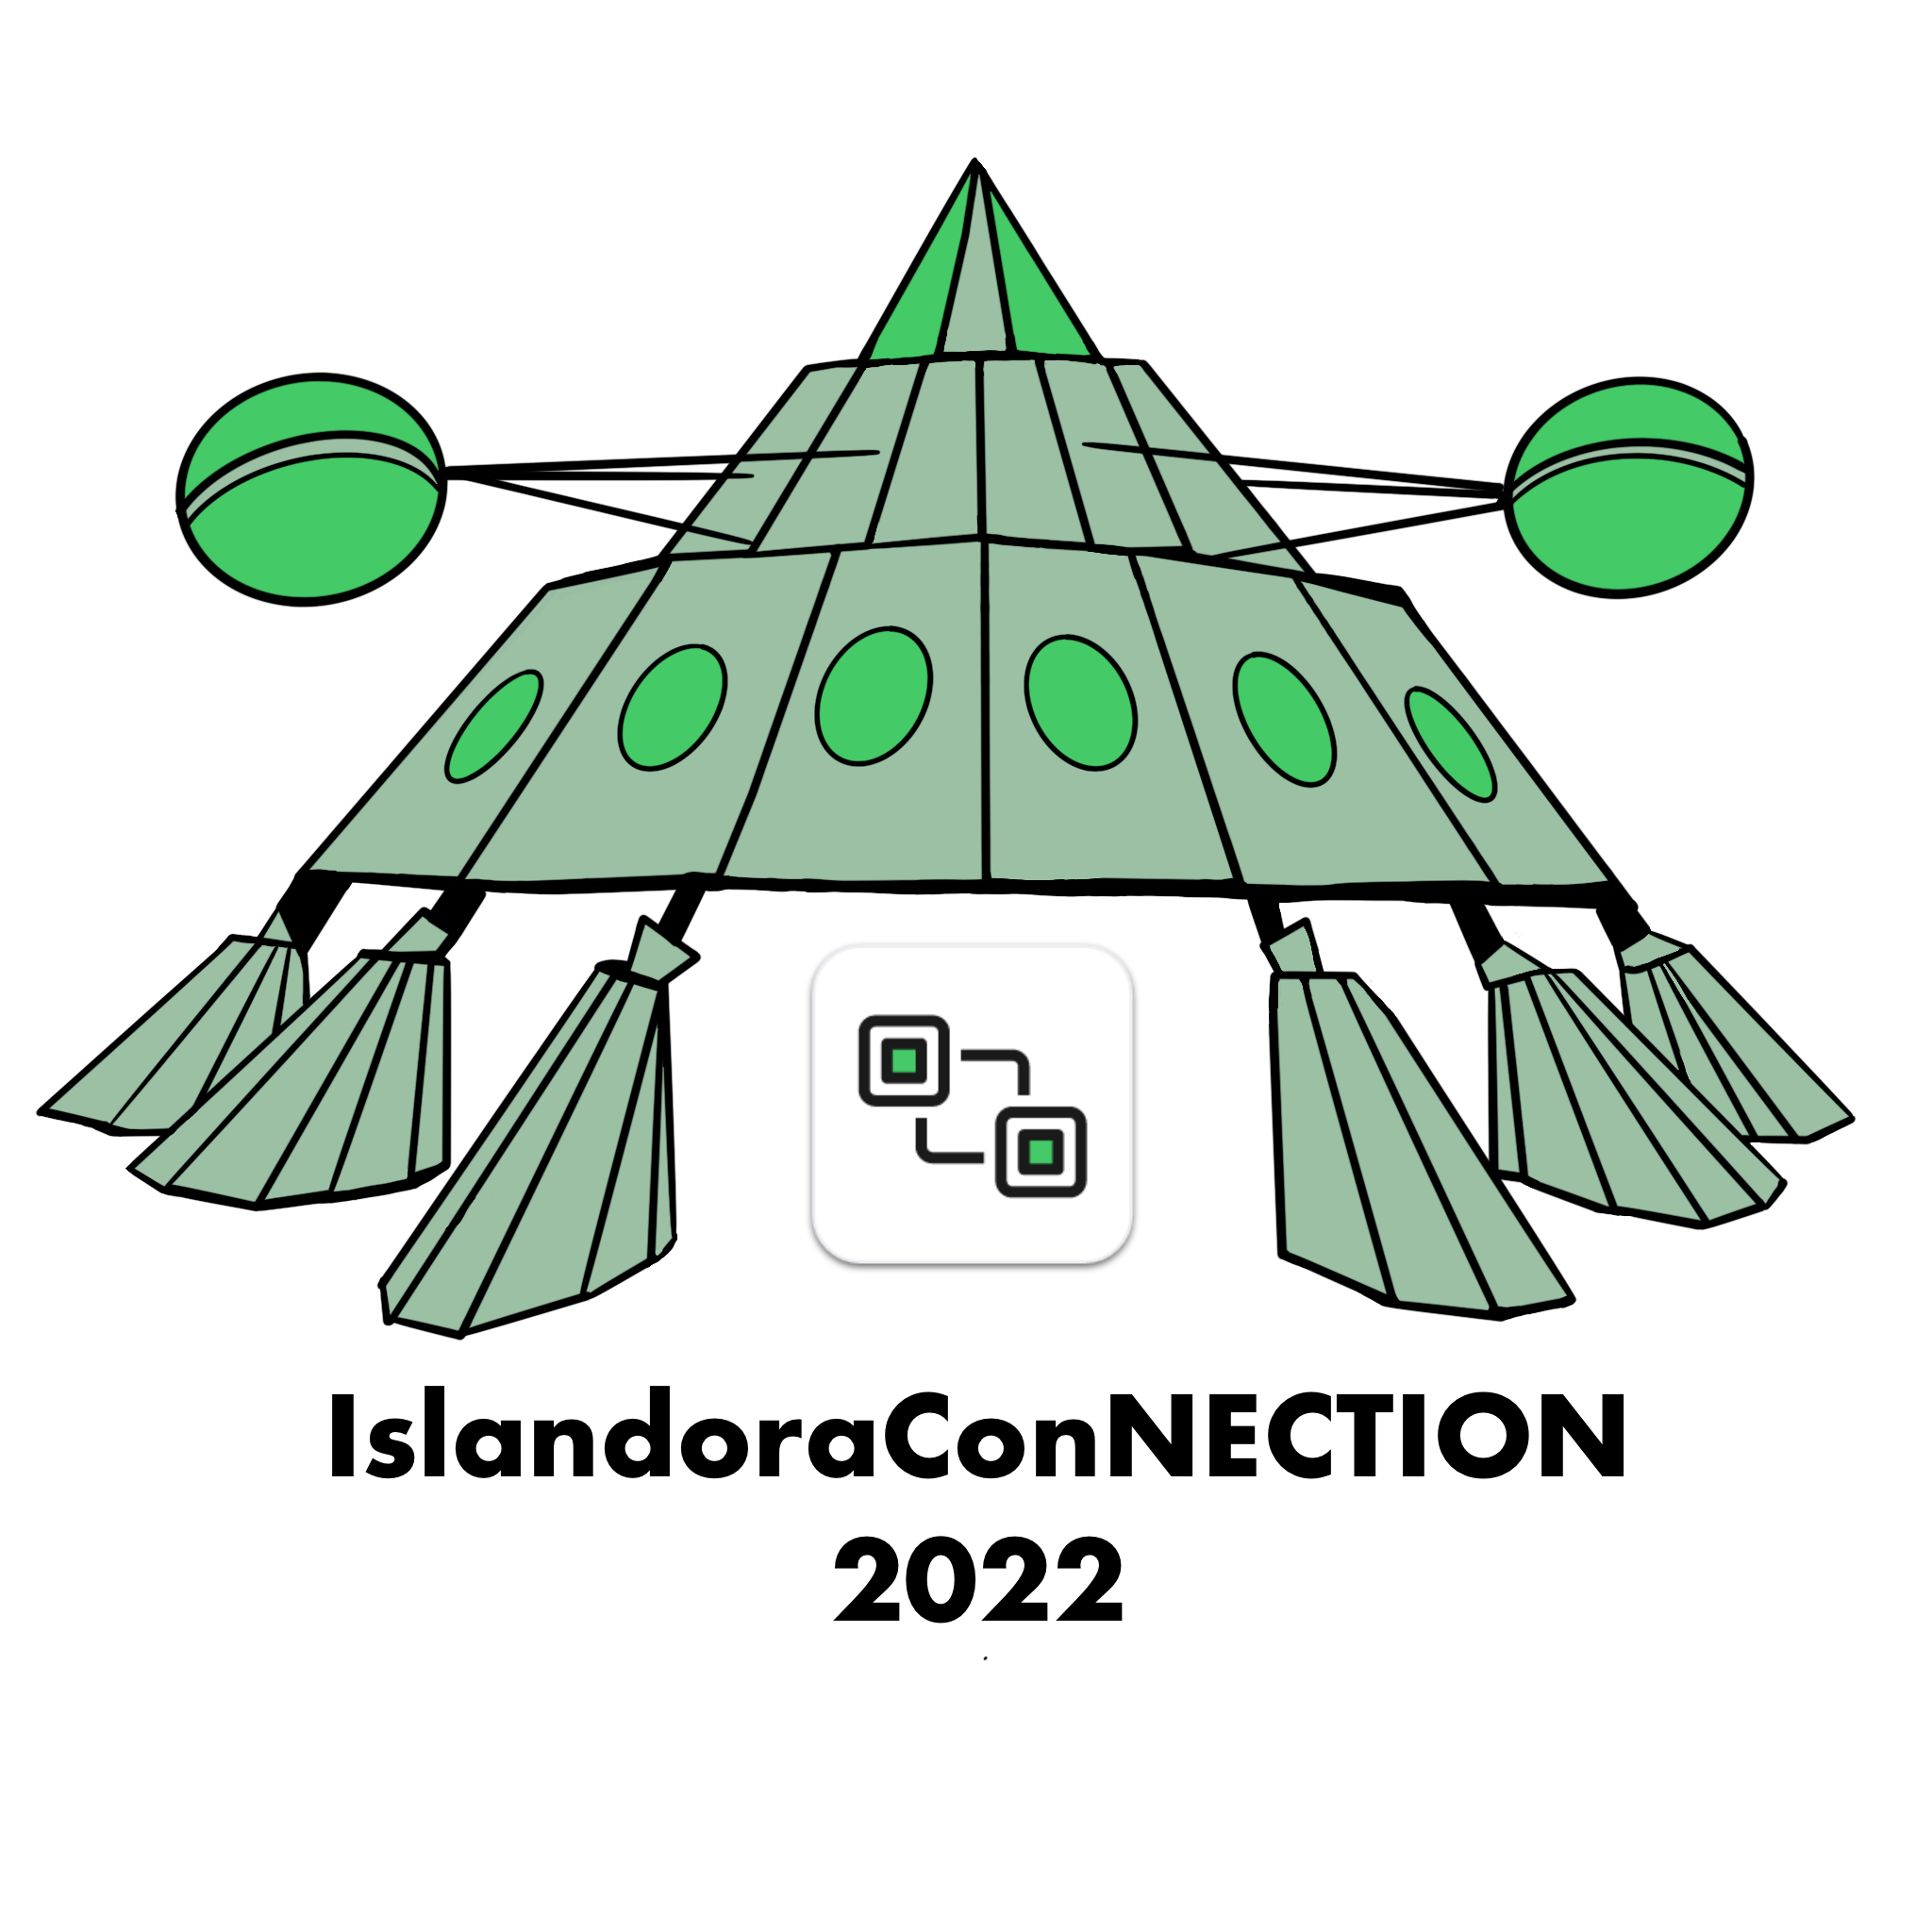 The islandoracon logo is shown underneath a green mothership, captioned IslandoraConNECTION 2022